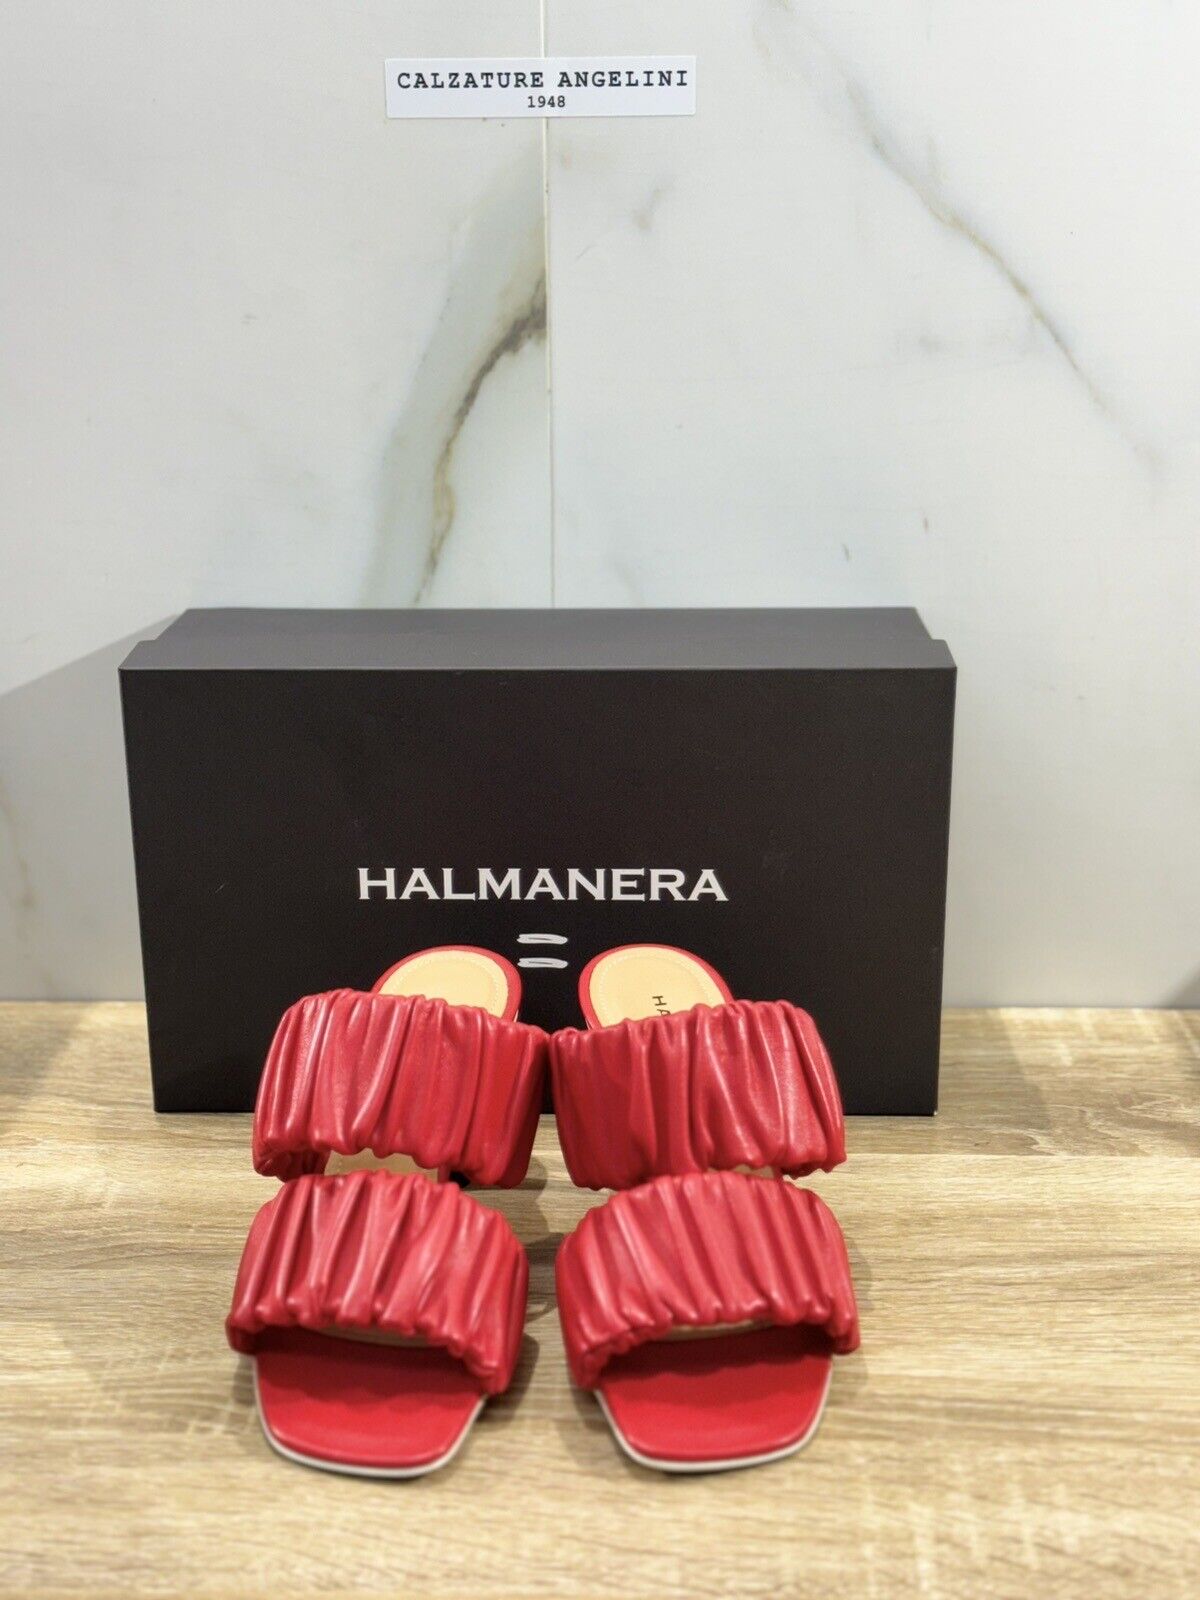 Halmanera Sandalo donna in pelle Rosso luxury sandal 36